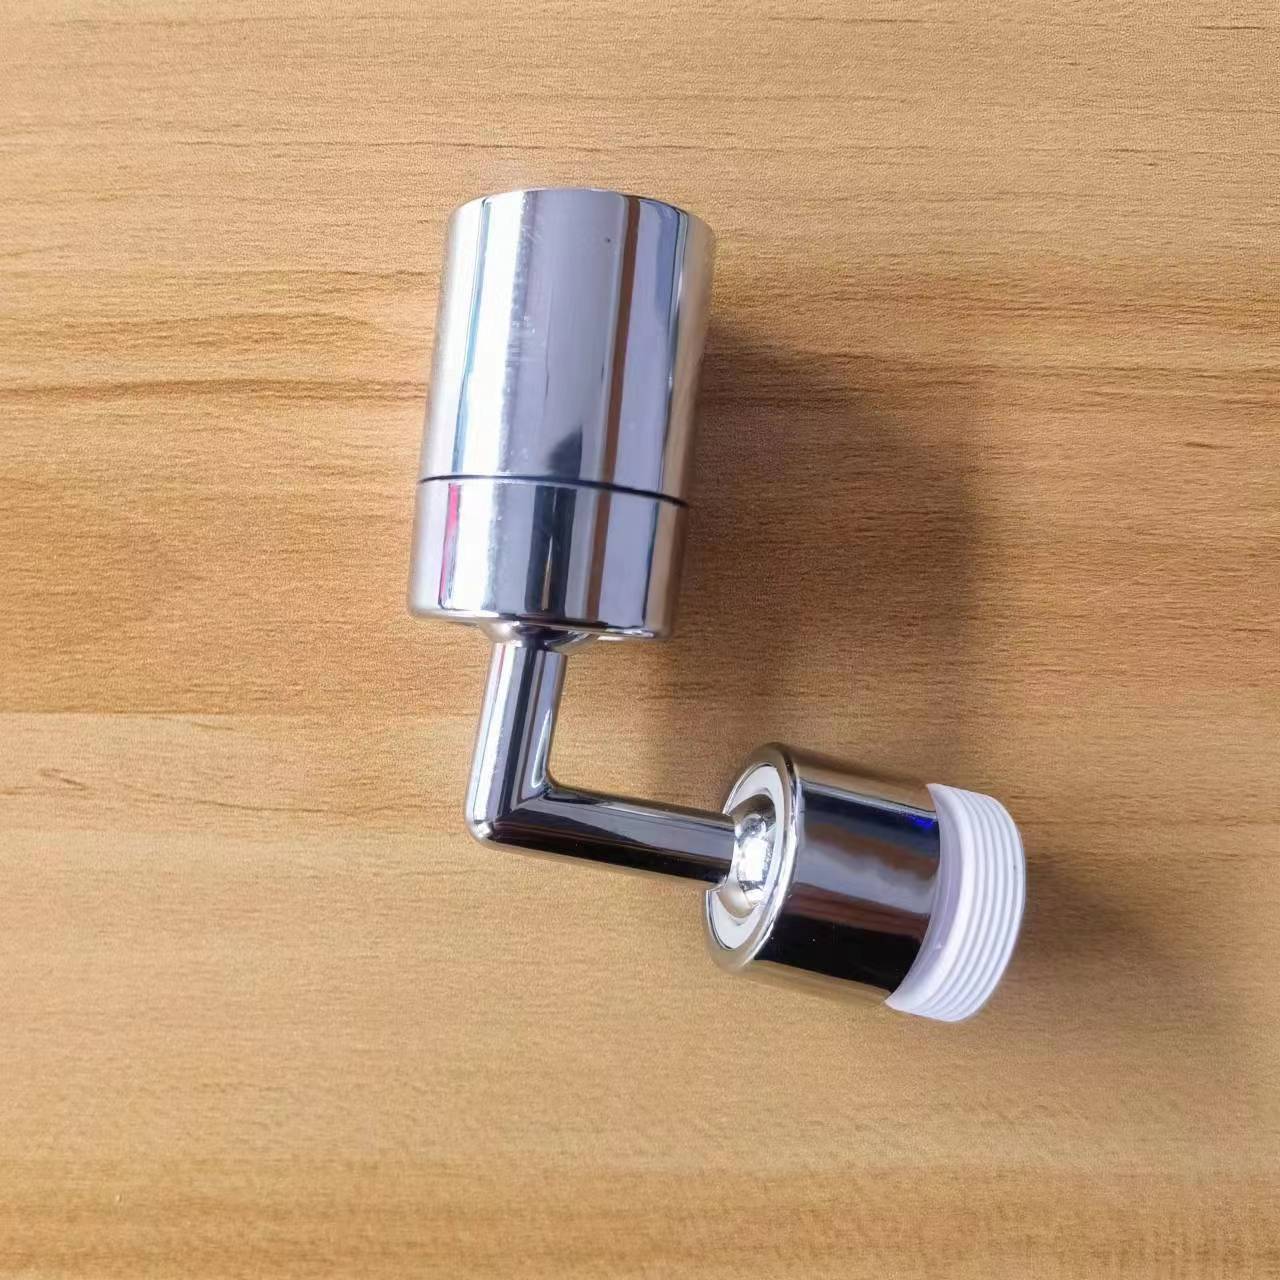 720 ° Rotating Universal Faucet Anti-Splash Head Water Faucet Washbasin Universal Sprinkler Bathroom Washing Foaming Water Tap